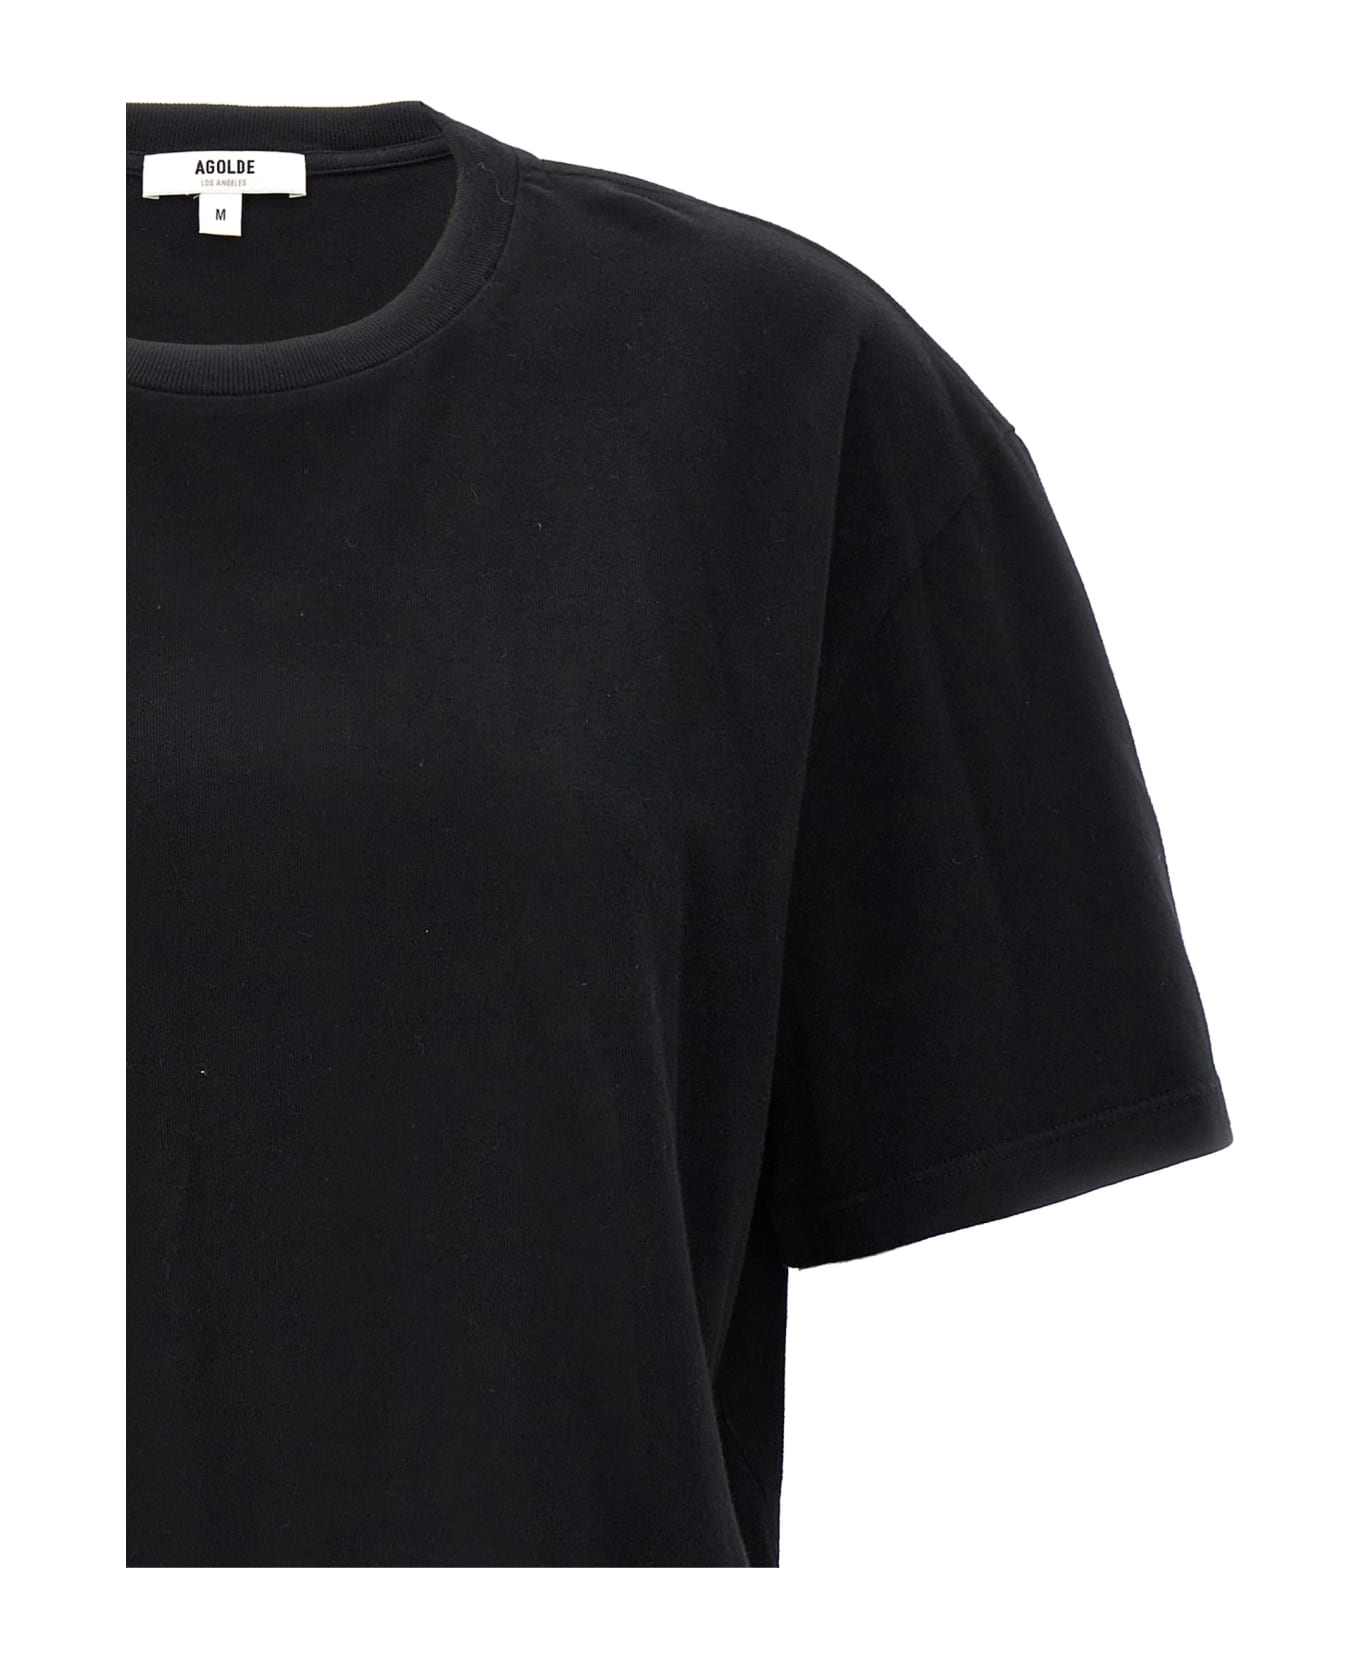 AGOLDE 'anya' T-shirt - Black  